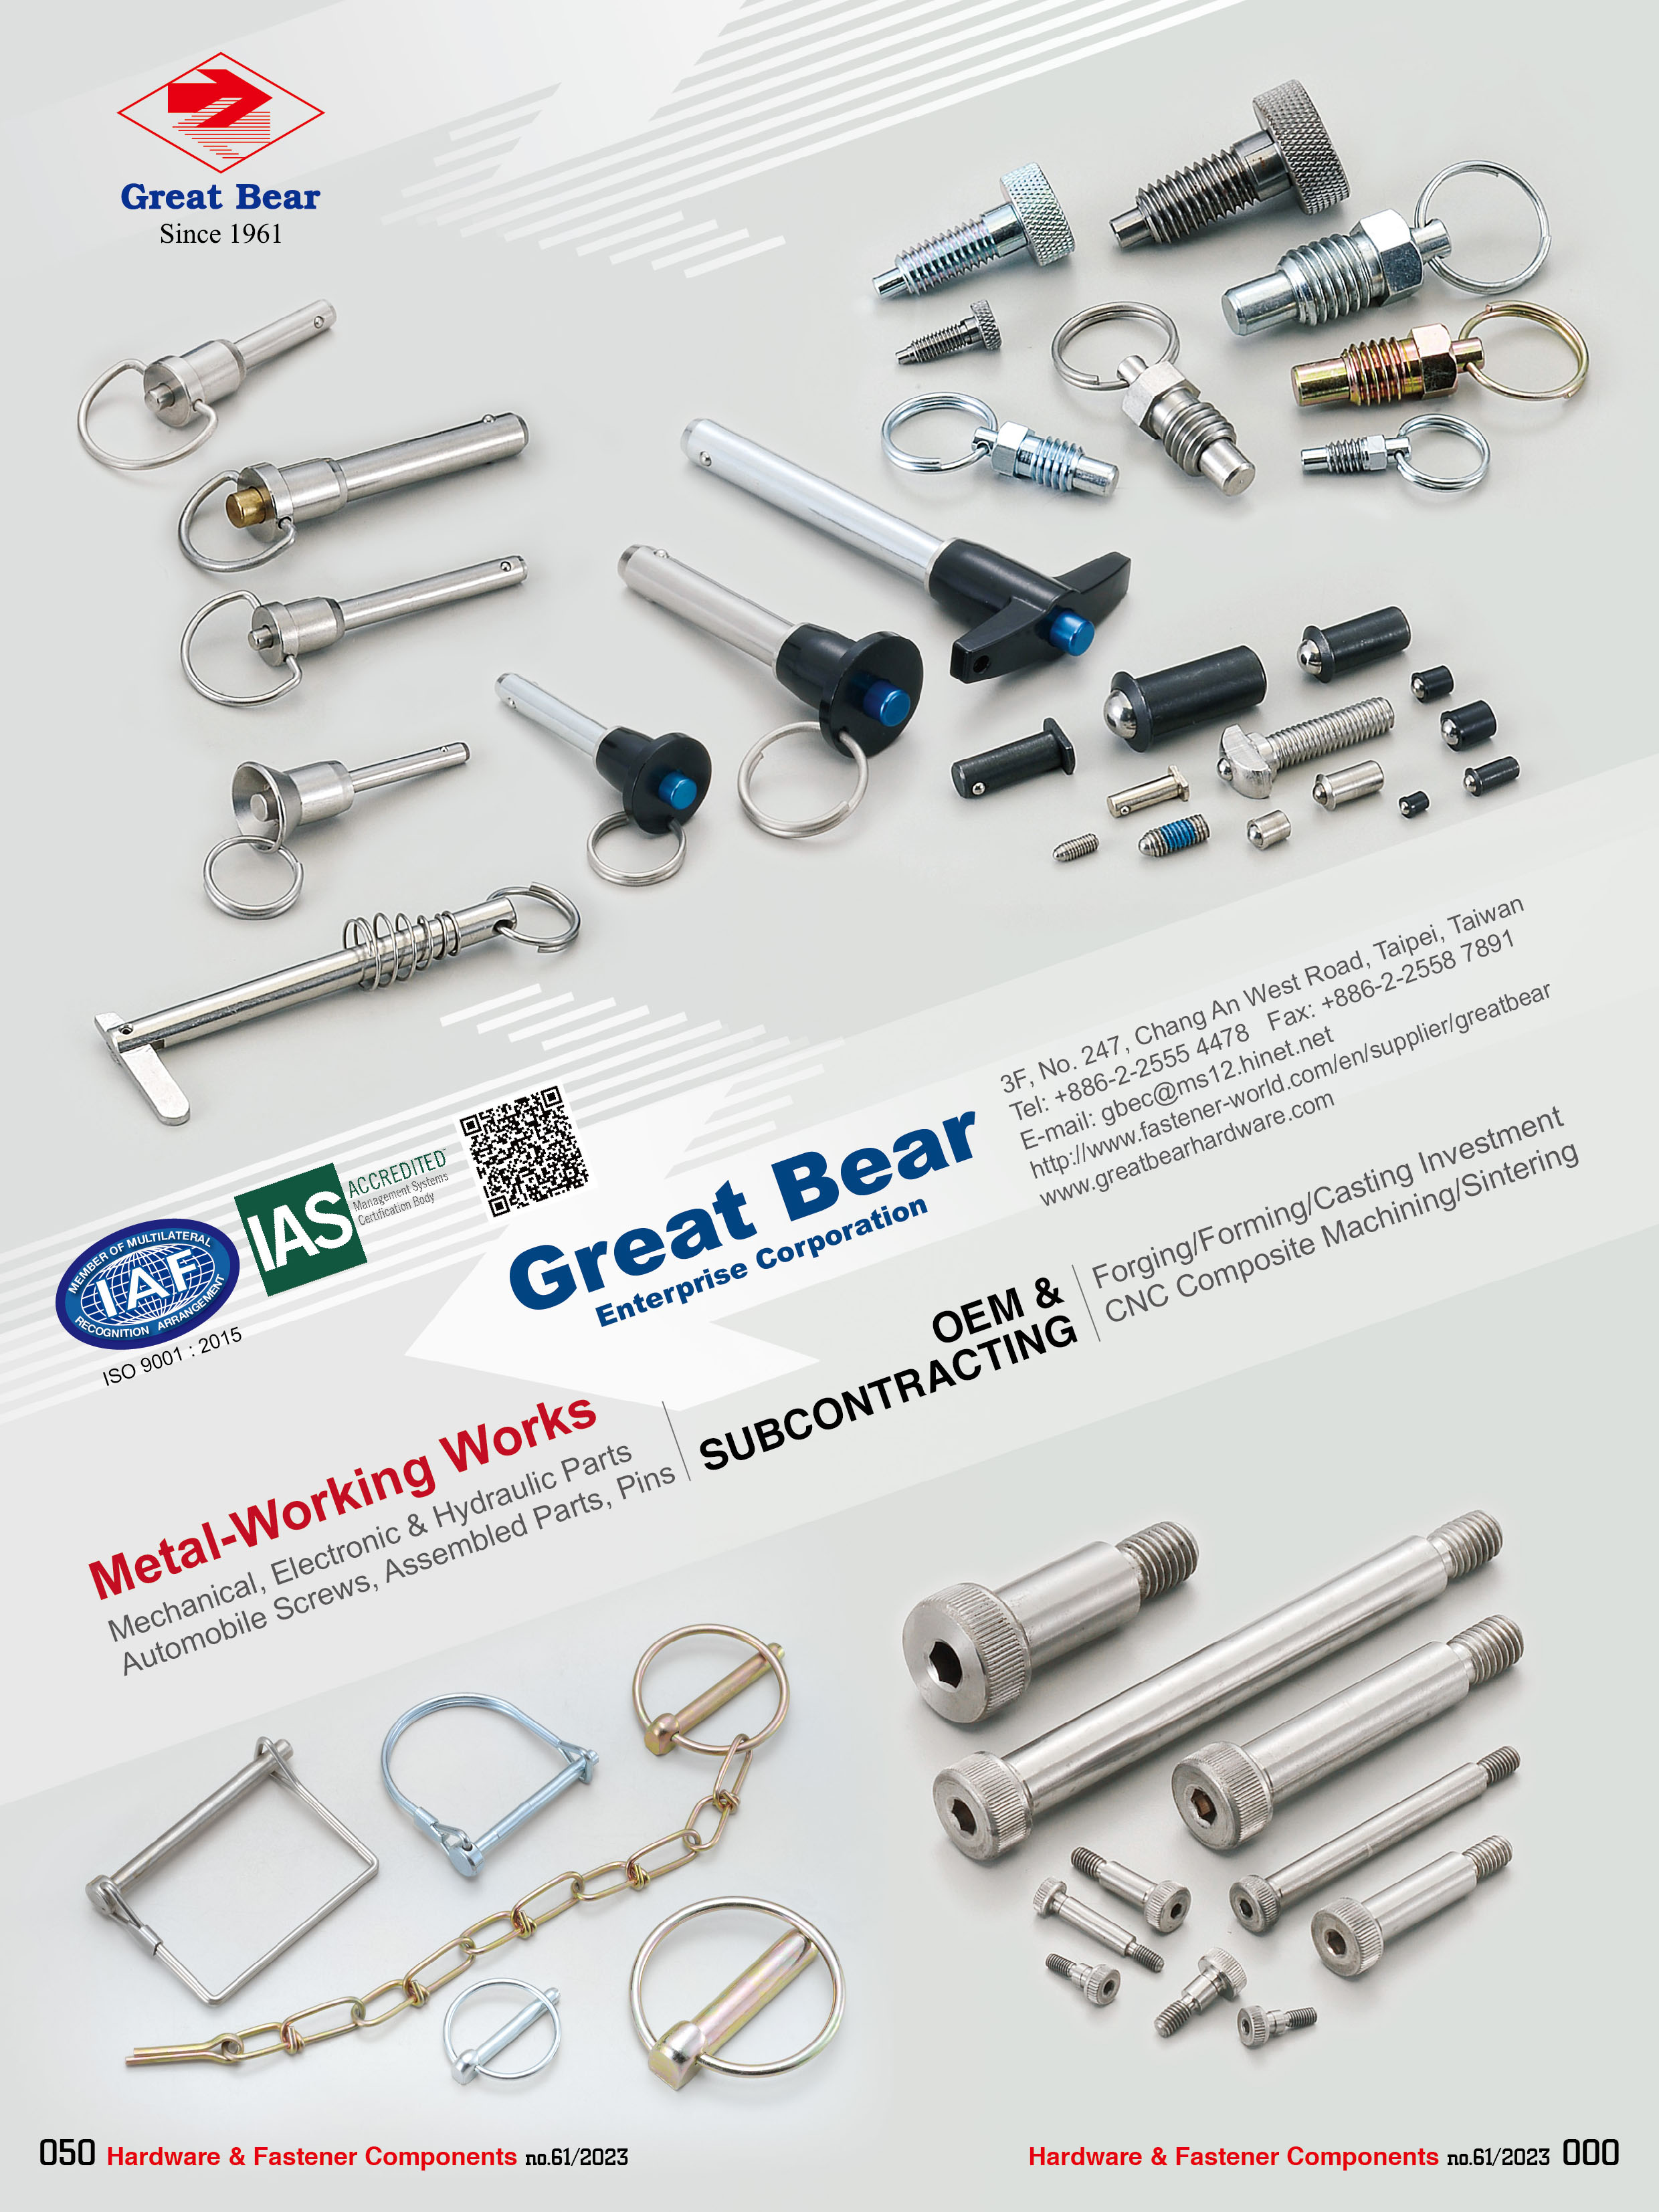 GREAT BEAR ENTERPRISE CORPORATION , Mechanical, Electronic & Hydraulic Parts, Automobile Screws, Assembled Parts, Pins